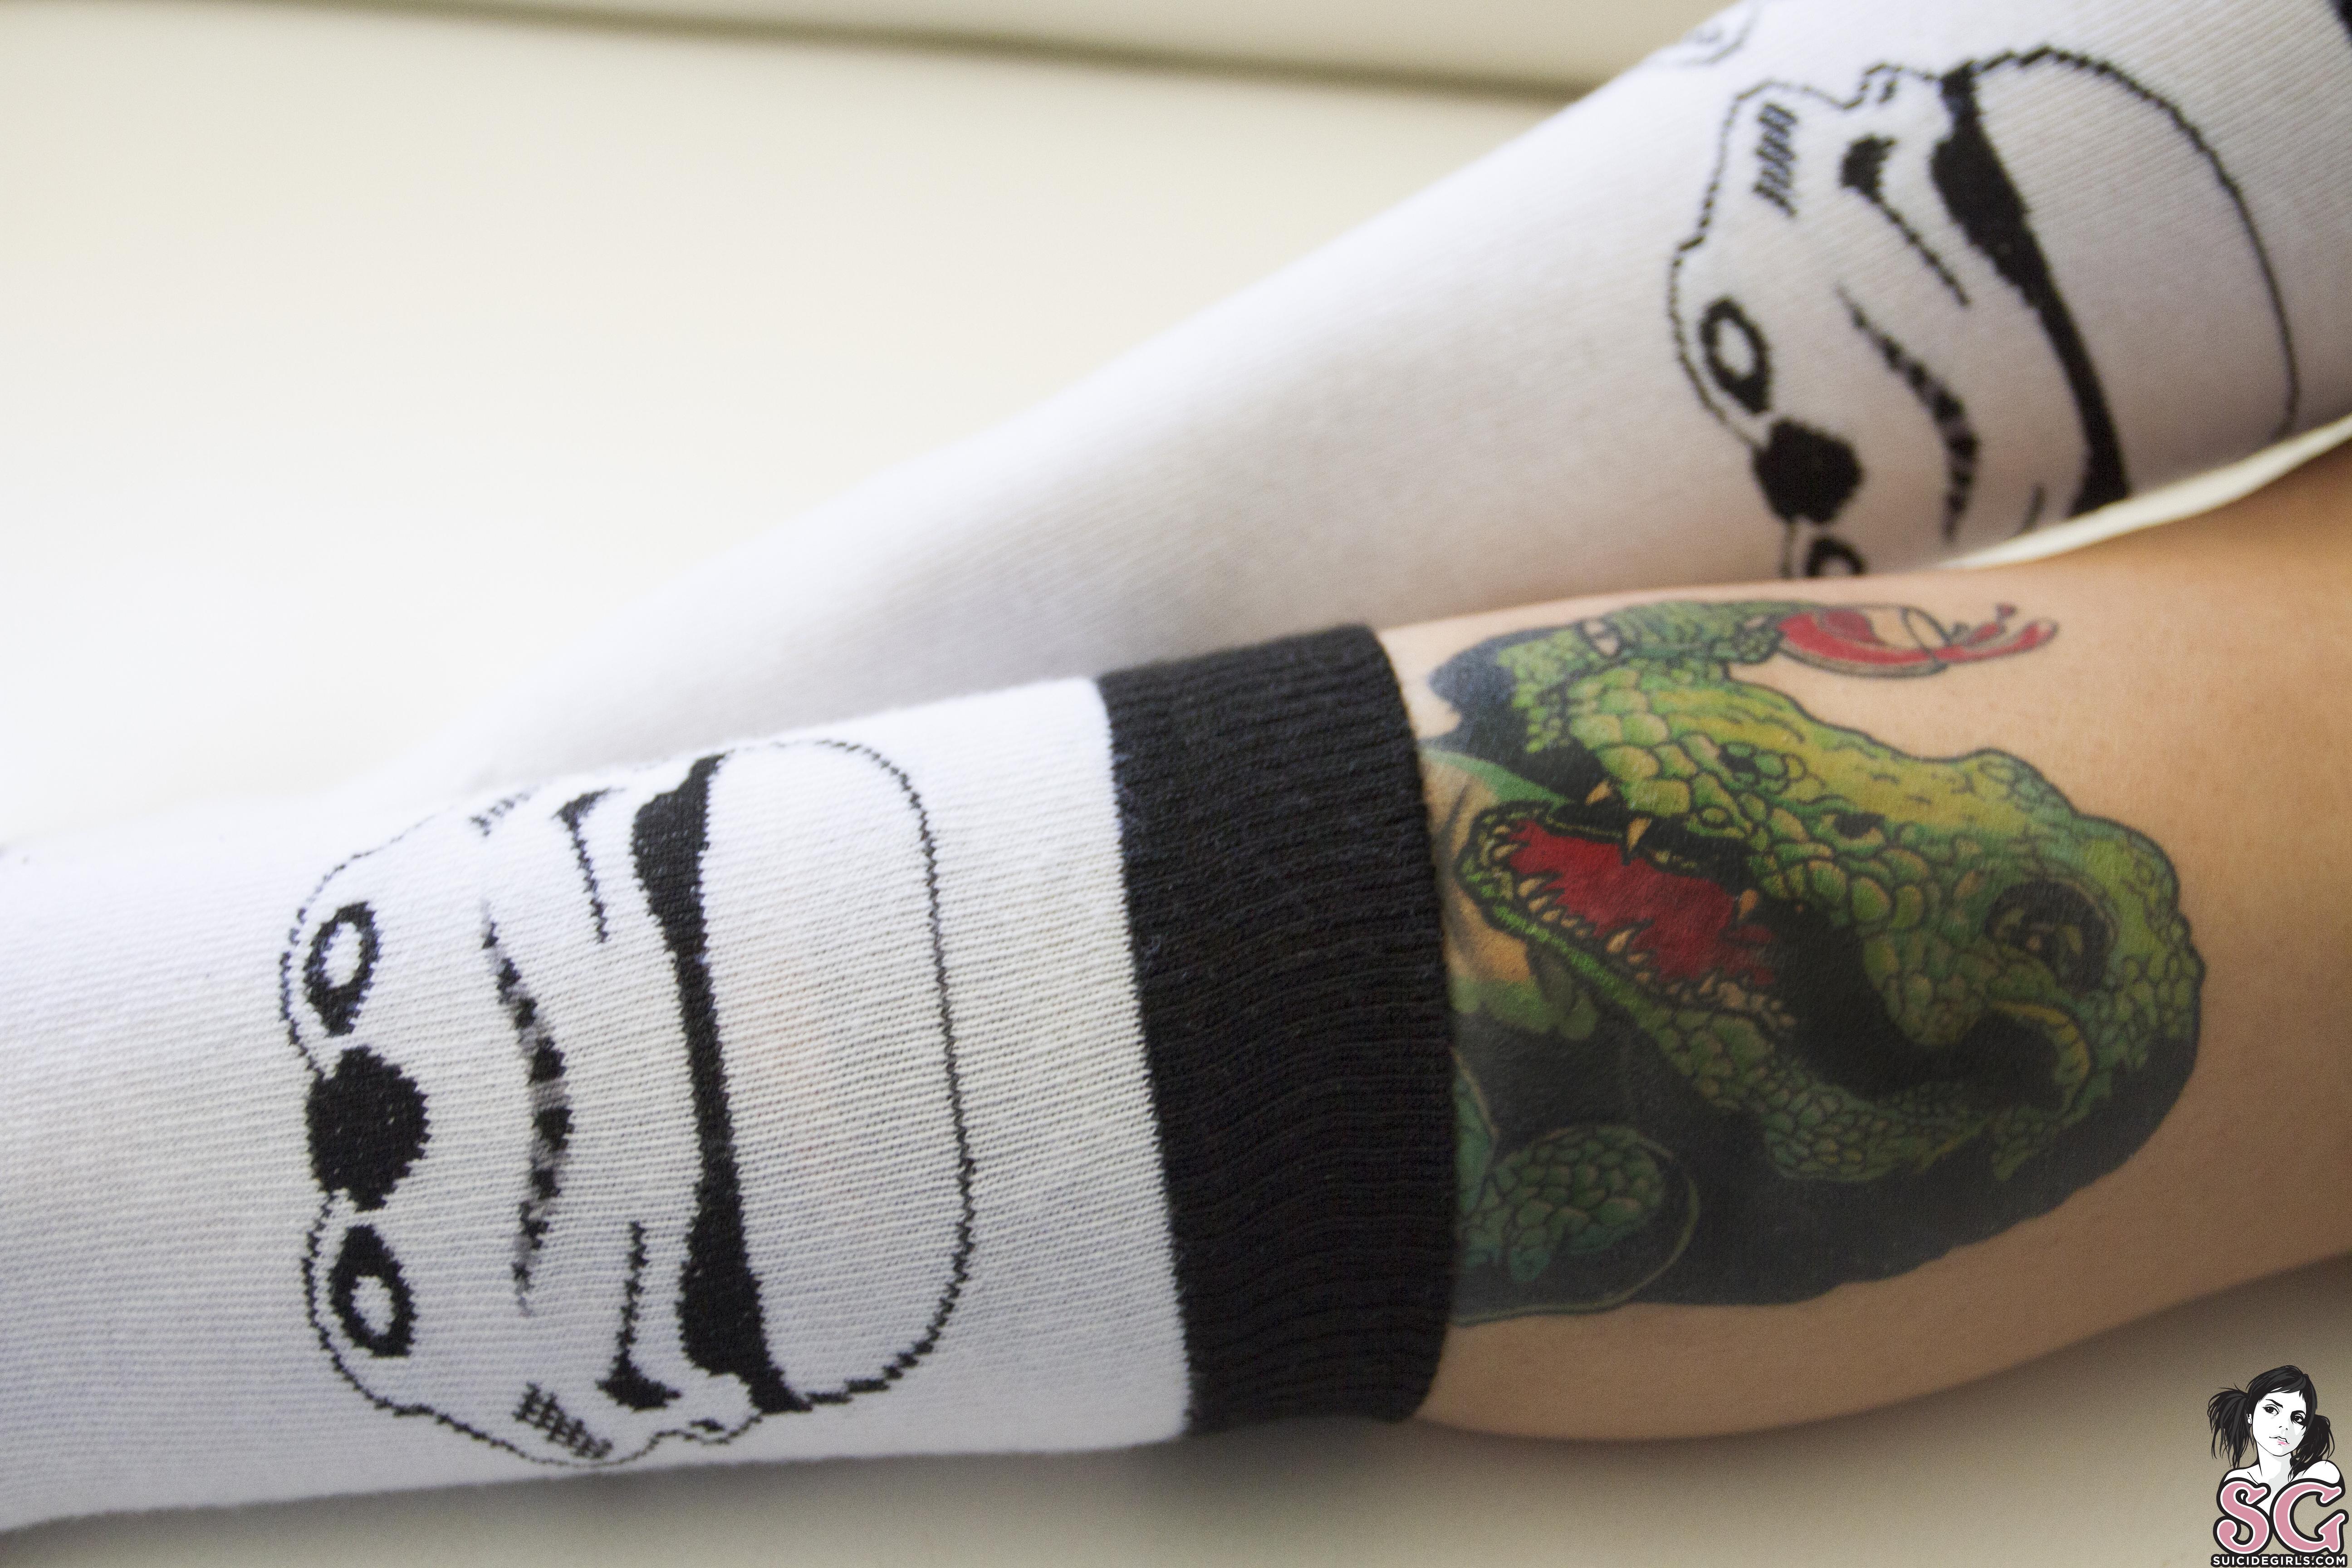 People 5184x3456 Suicide Girls tattoo socks dinosaurs white socks crew socks watermarked women